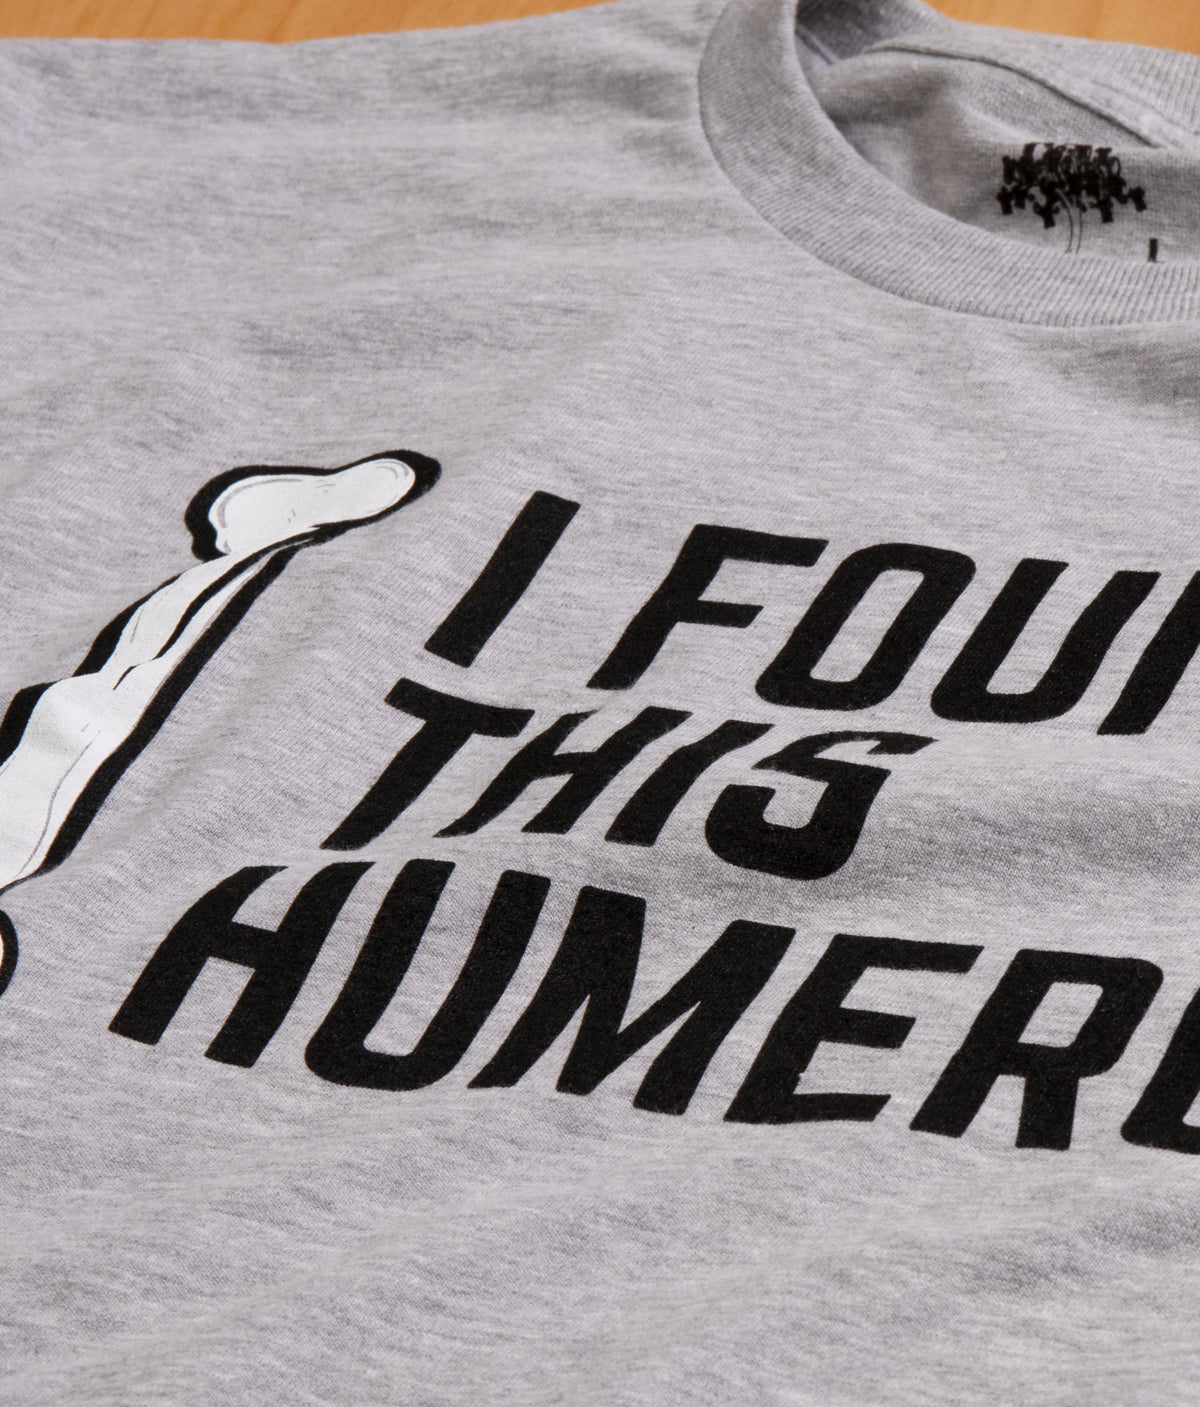 I Found this Humerus - Dad Joke Funny Pun Fun Humerous Grandpa Men T-shirt